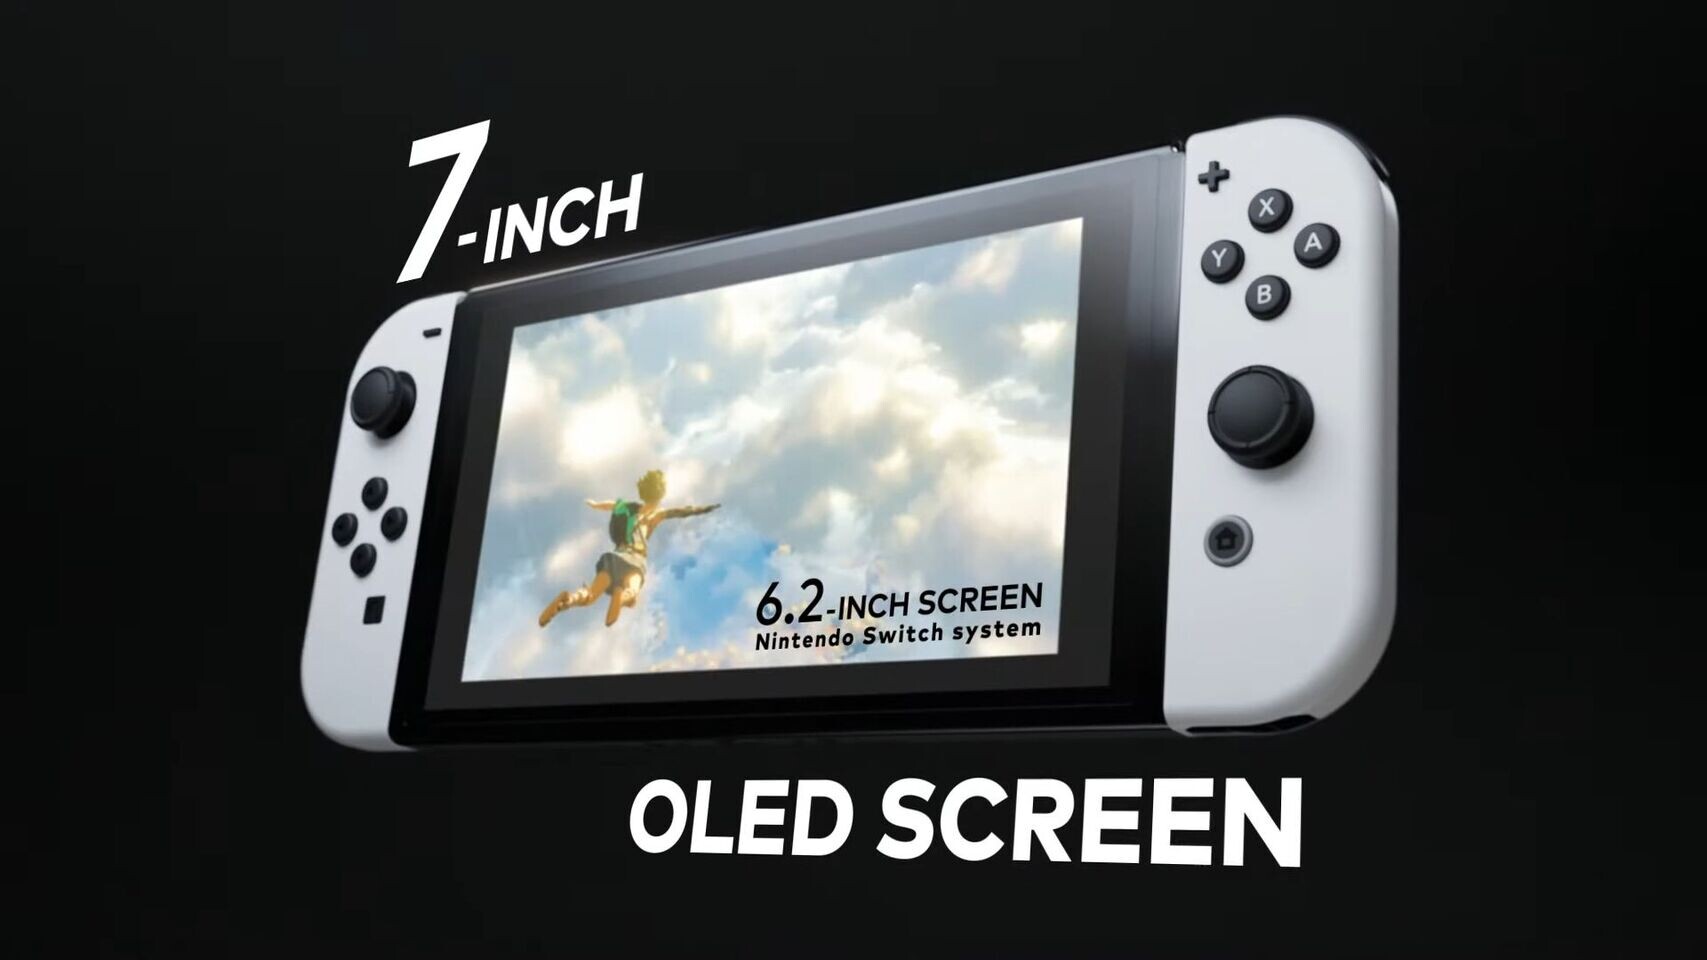 Nintendo Switch OLED screen